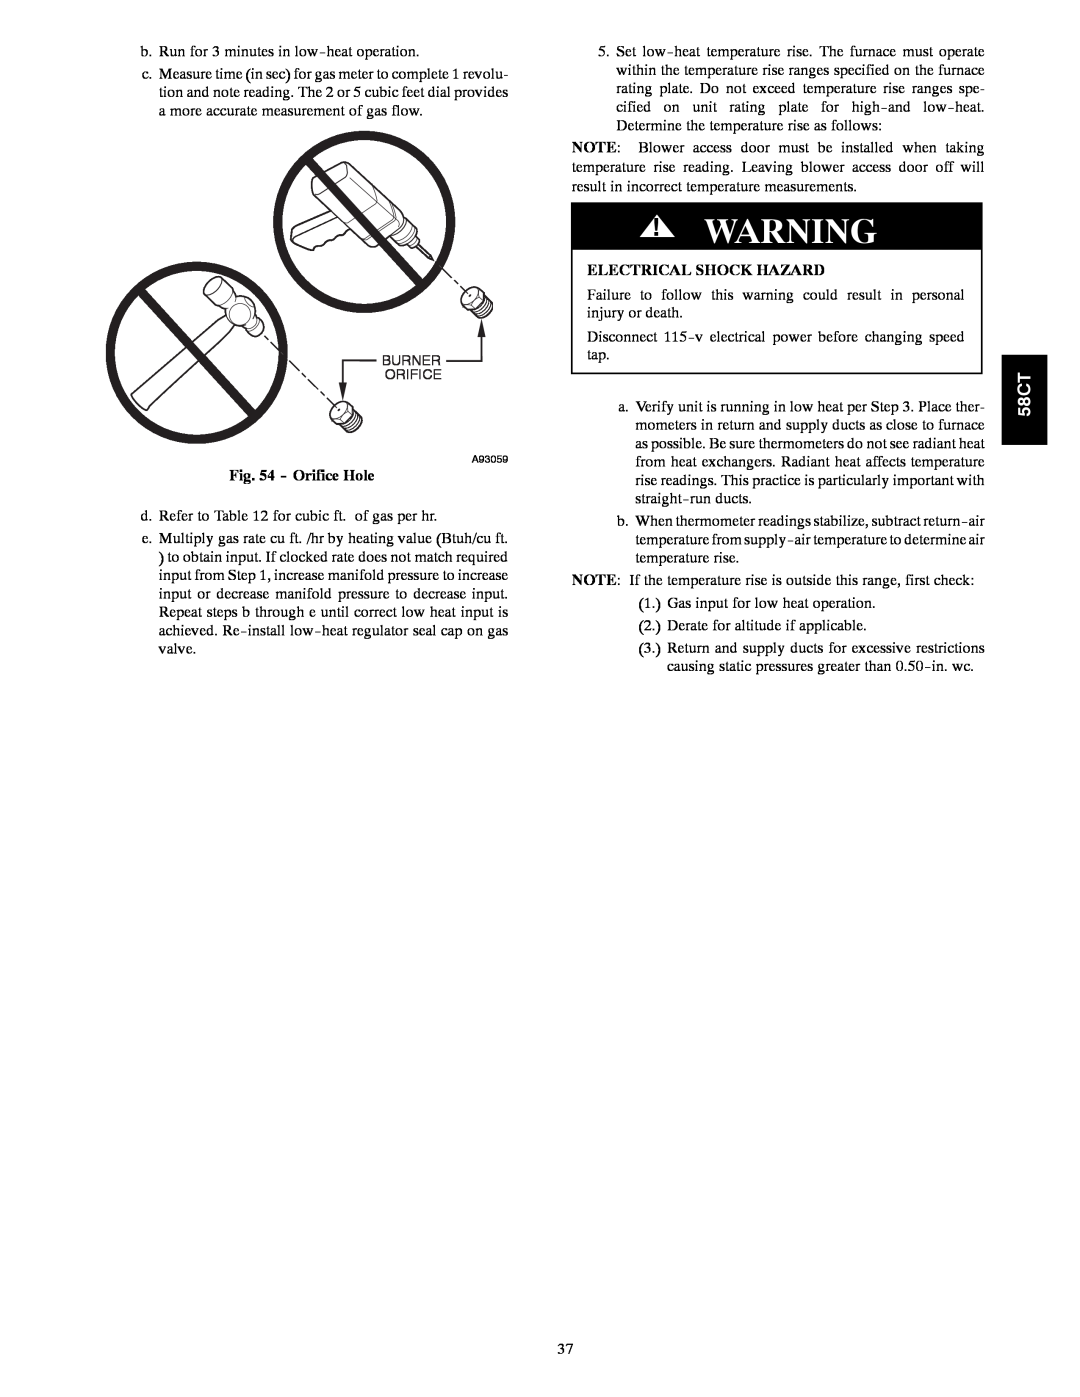 Carrier 58CTA/CTX instruction manual Orifice Hole, Electrical Shock Hazard 